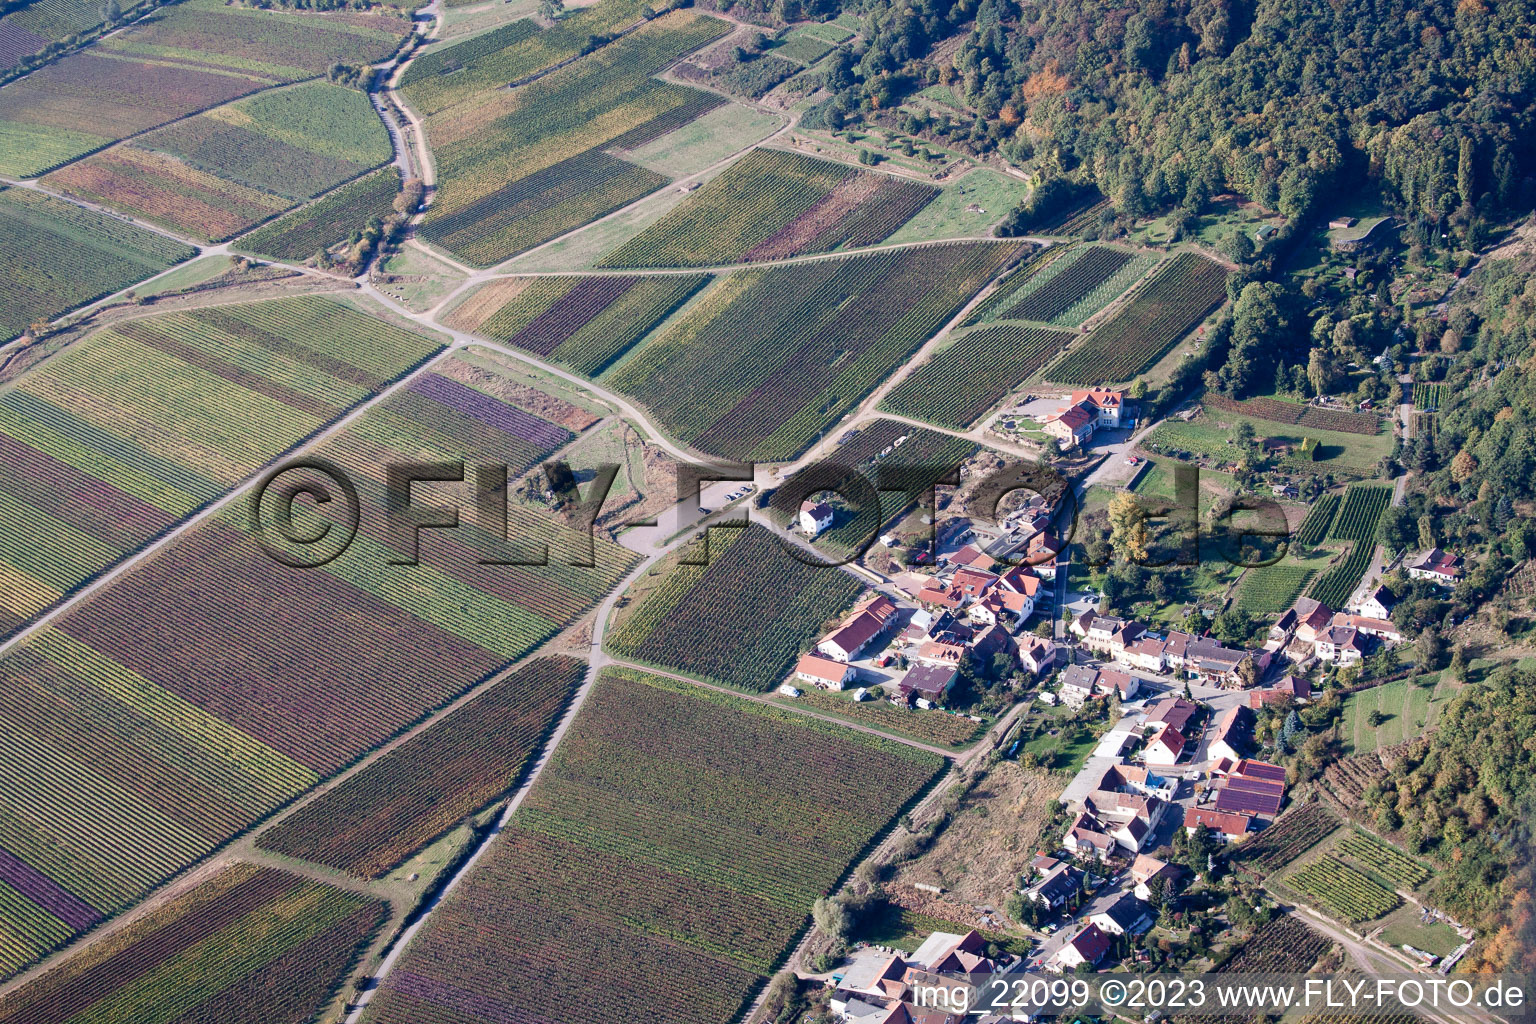 Drone image of District Diedesfeld in Neustadt an der Weinstraße in the state Rhineland-Palatinate, Germany